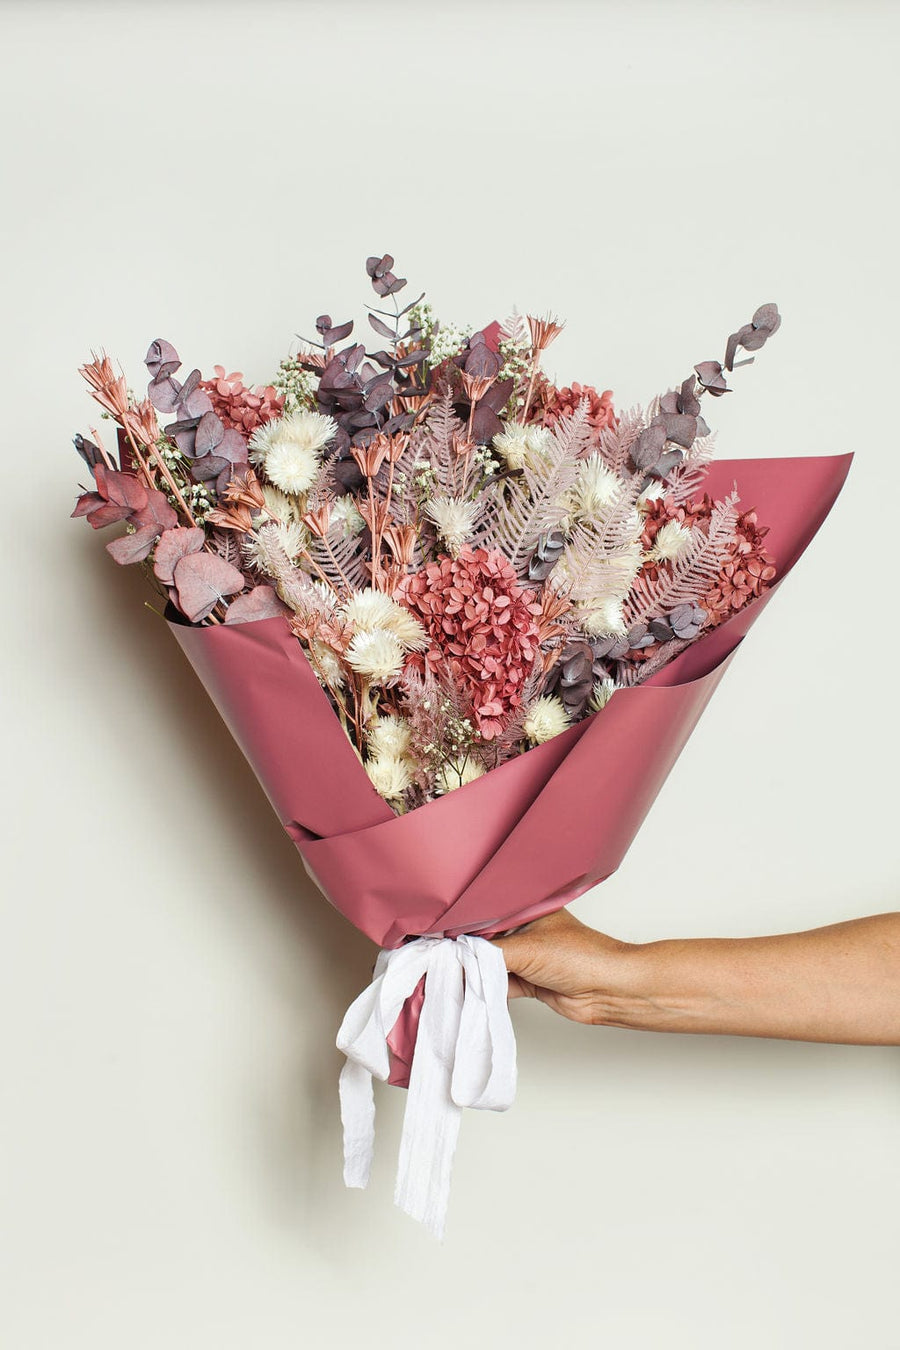 Idlewild Floral Co. Bouquets Sugar Plum Statement Bouquet